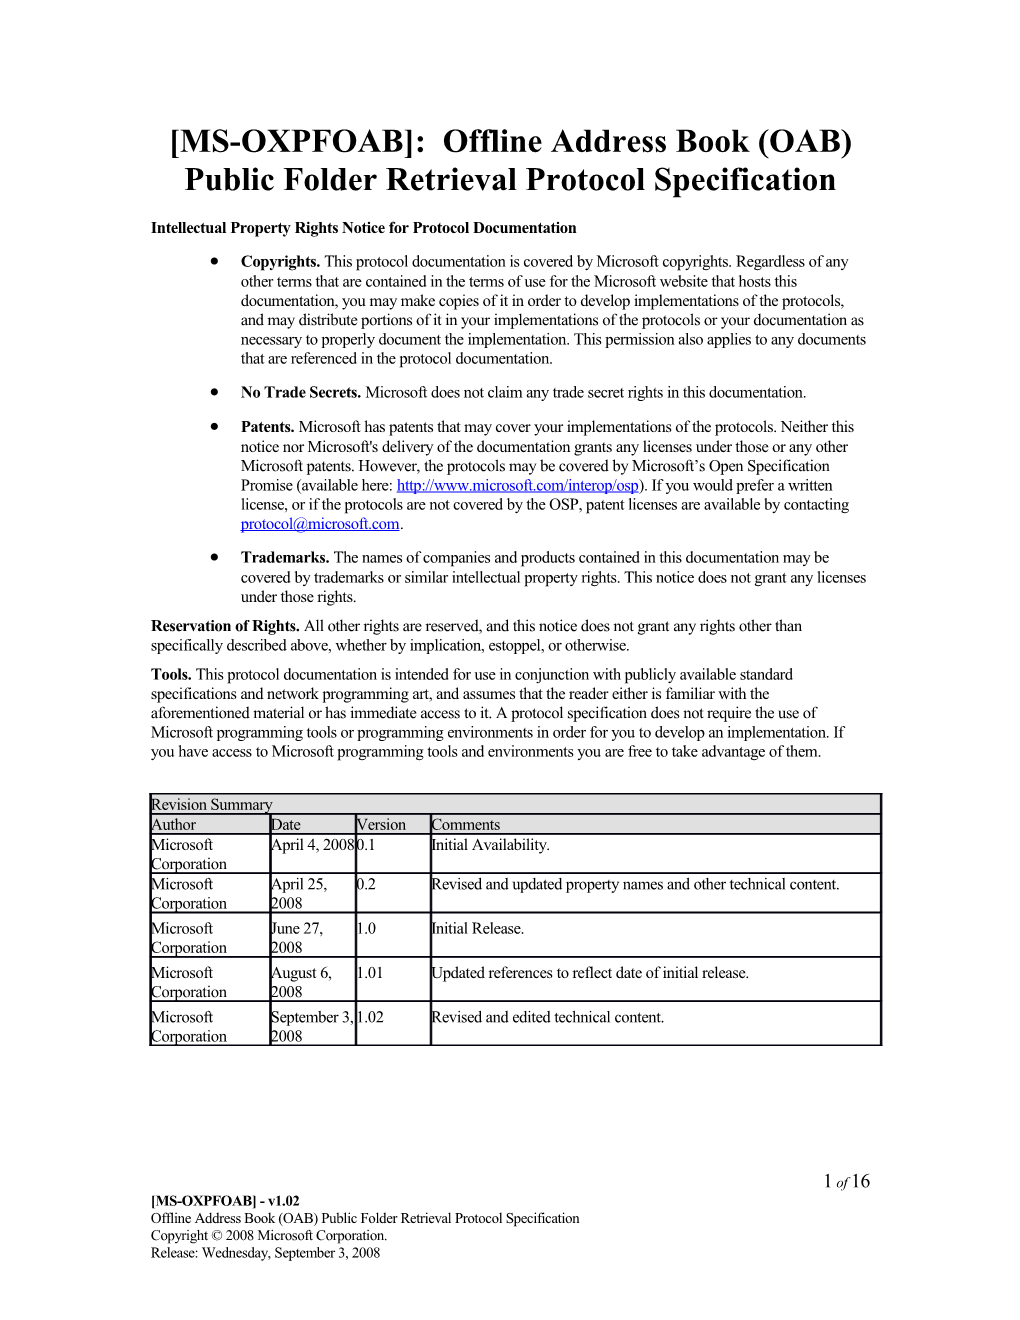 MS-OXPFOAB : Offline Address Book (OAB) Public Folder Retrieval Protocol Specification